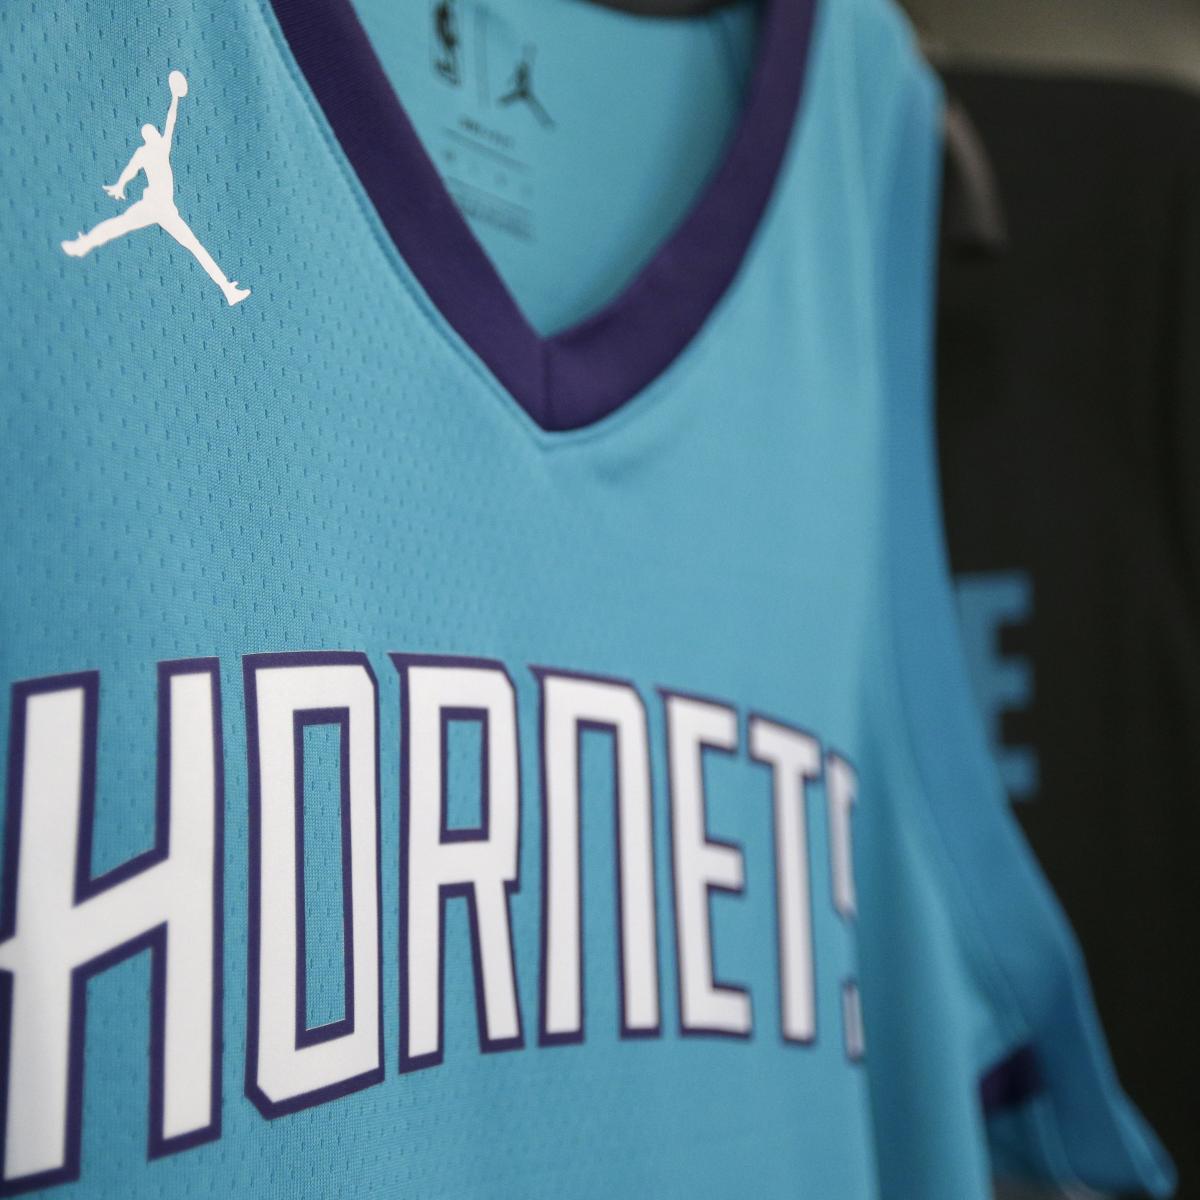 Jordan Imprint’s Jumpman Logo Will Seem on NBA ‘Assertion’ Uniforms in 2020-21